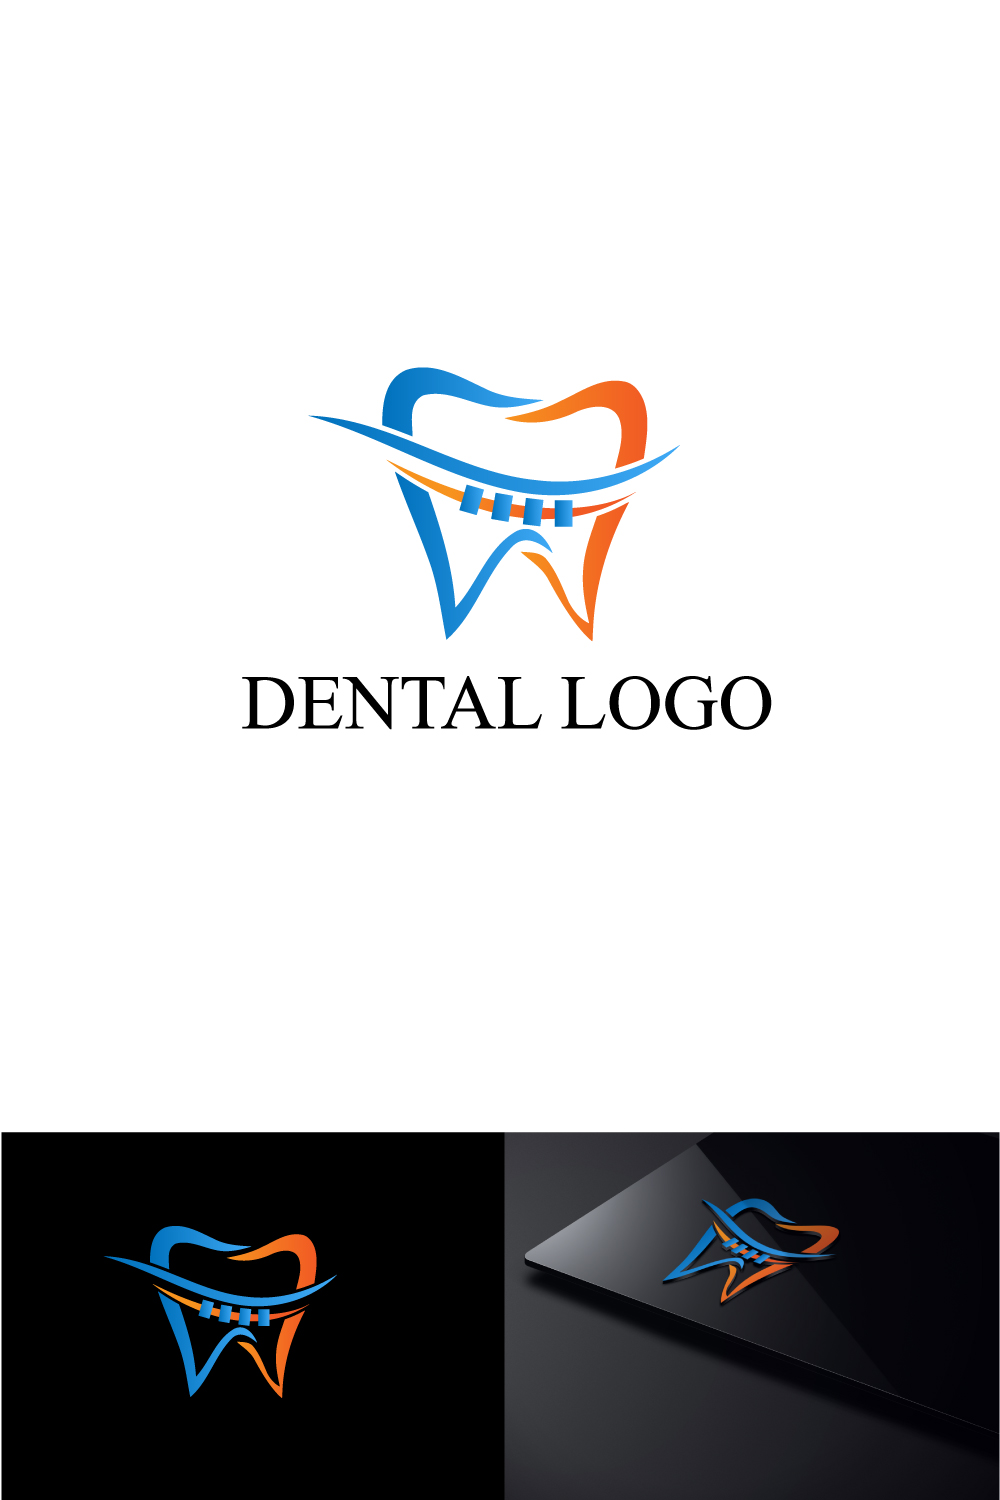 Dental logo, dental logo, dental, modern dental logo, dental icon, dental company logo, dental business logo pinterest preview image.